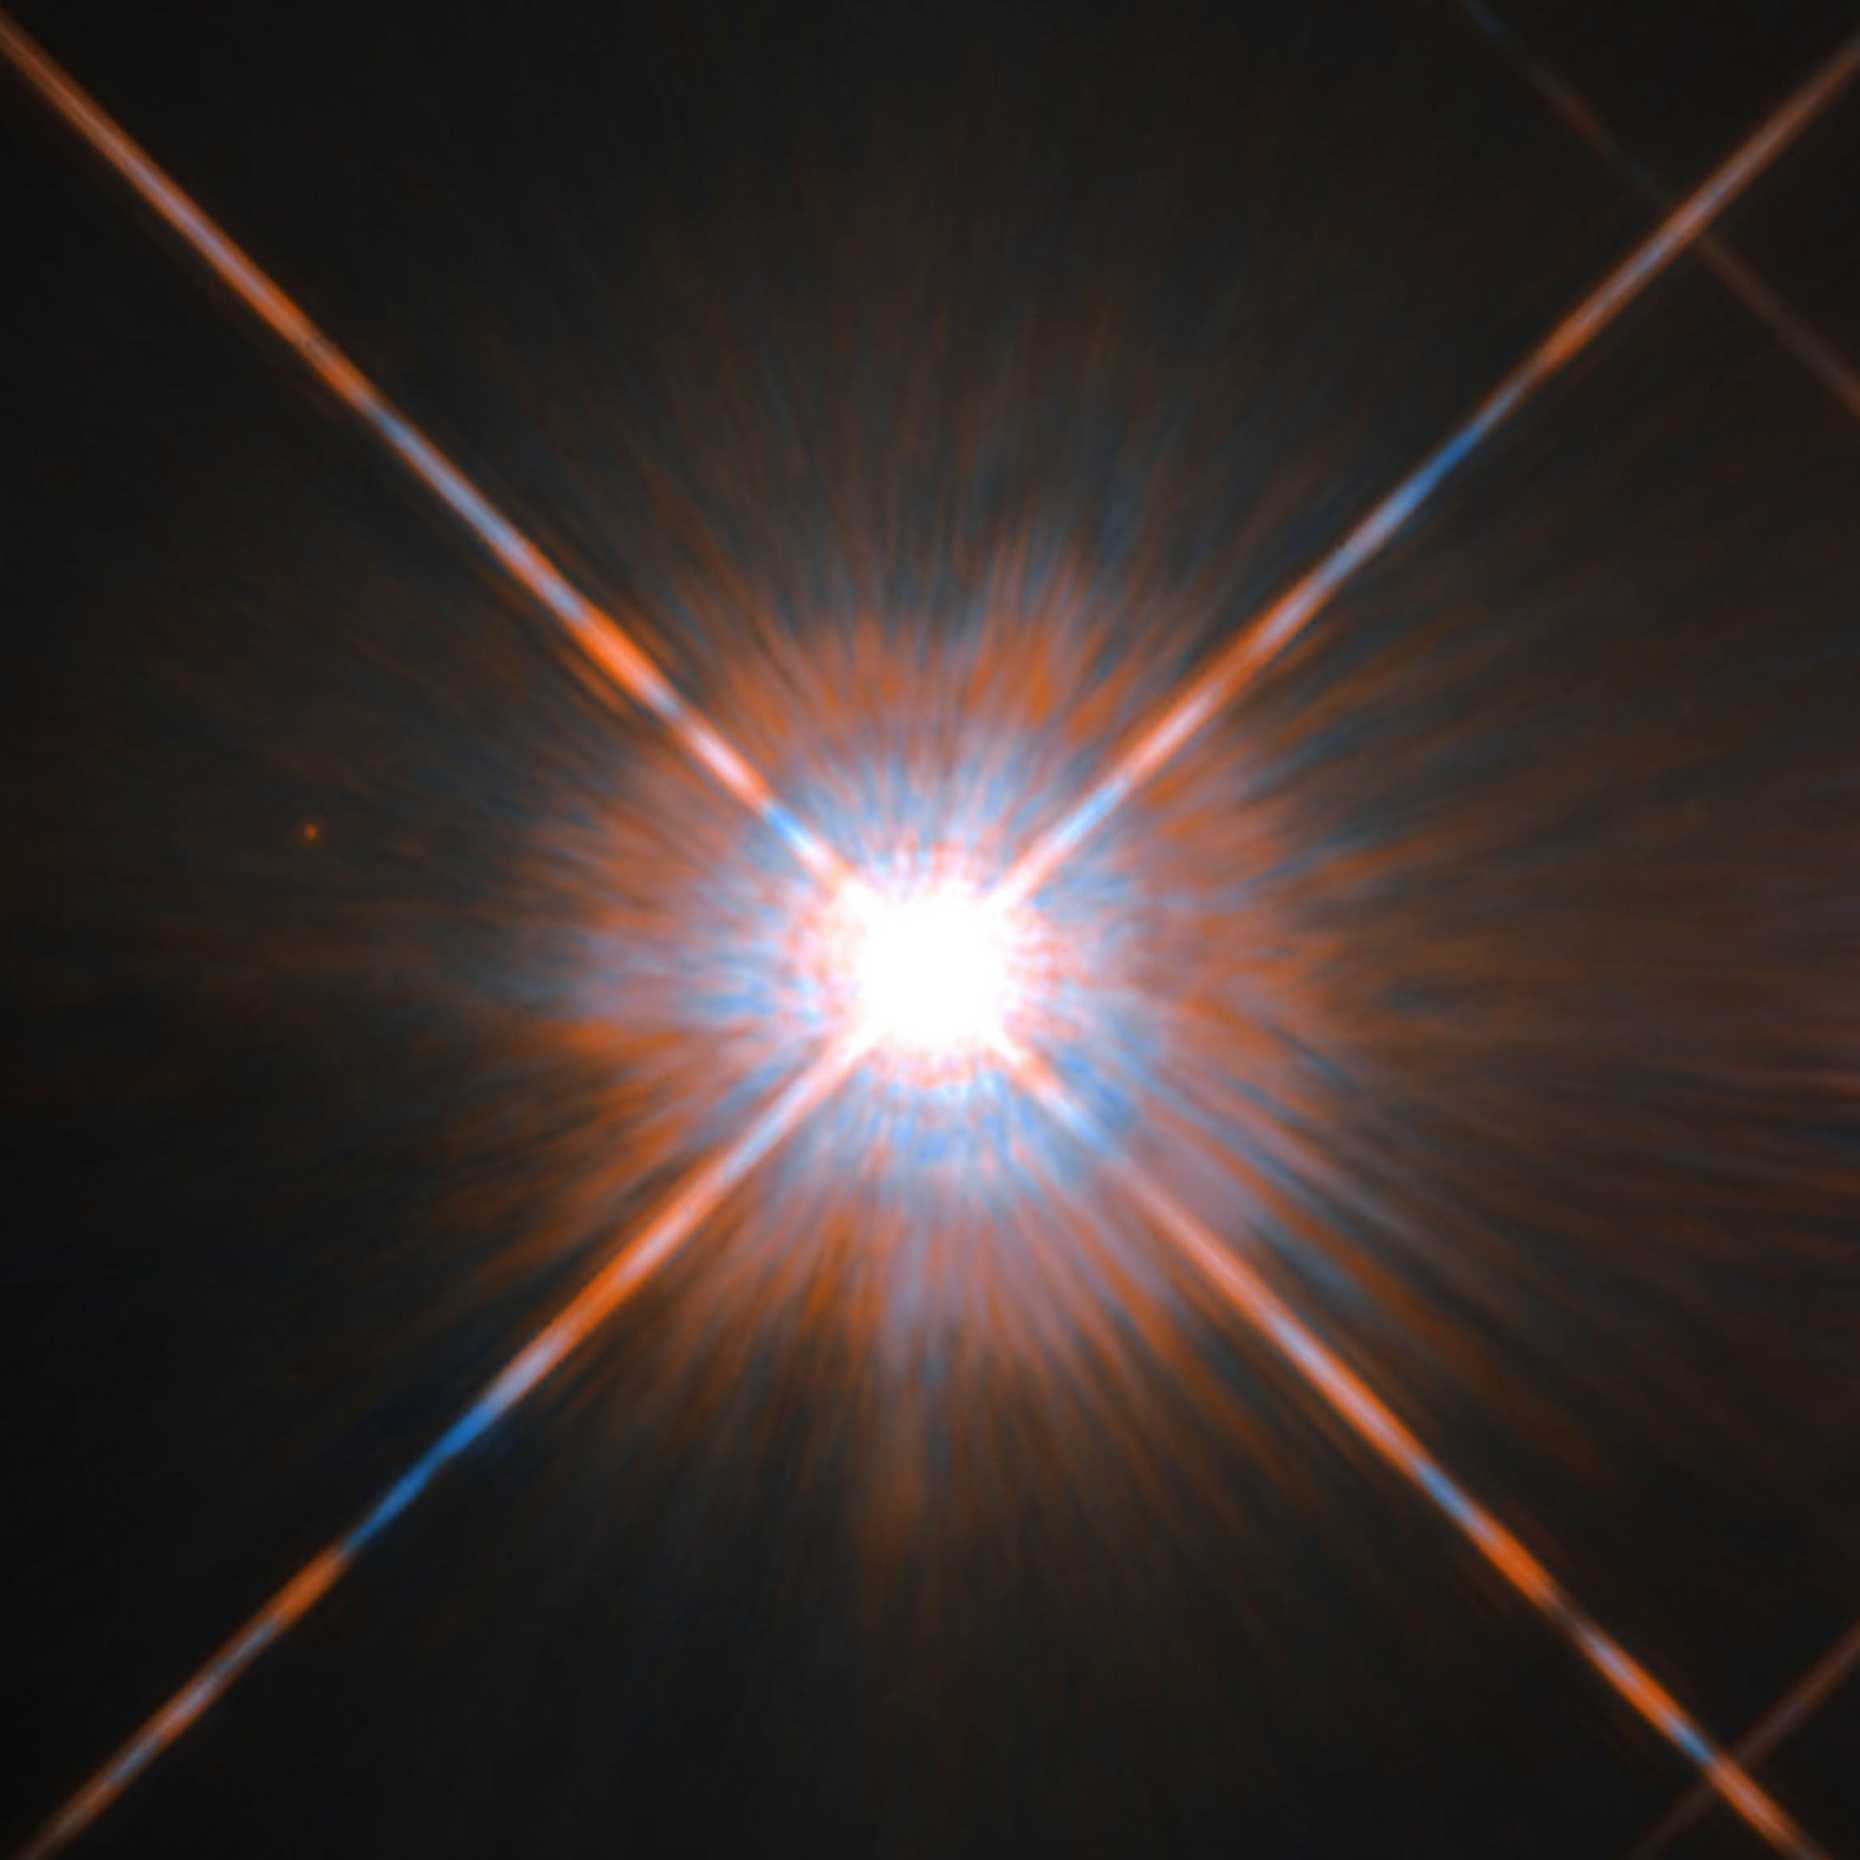 Alpha-Centauri